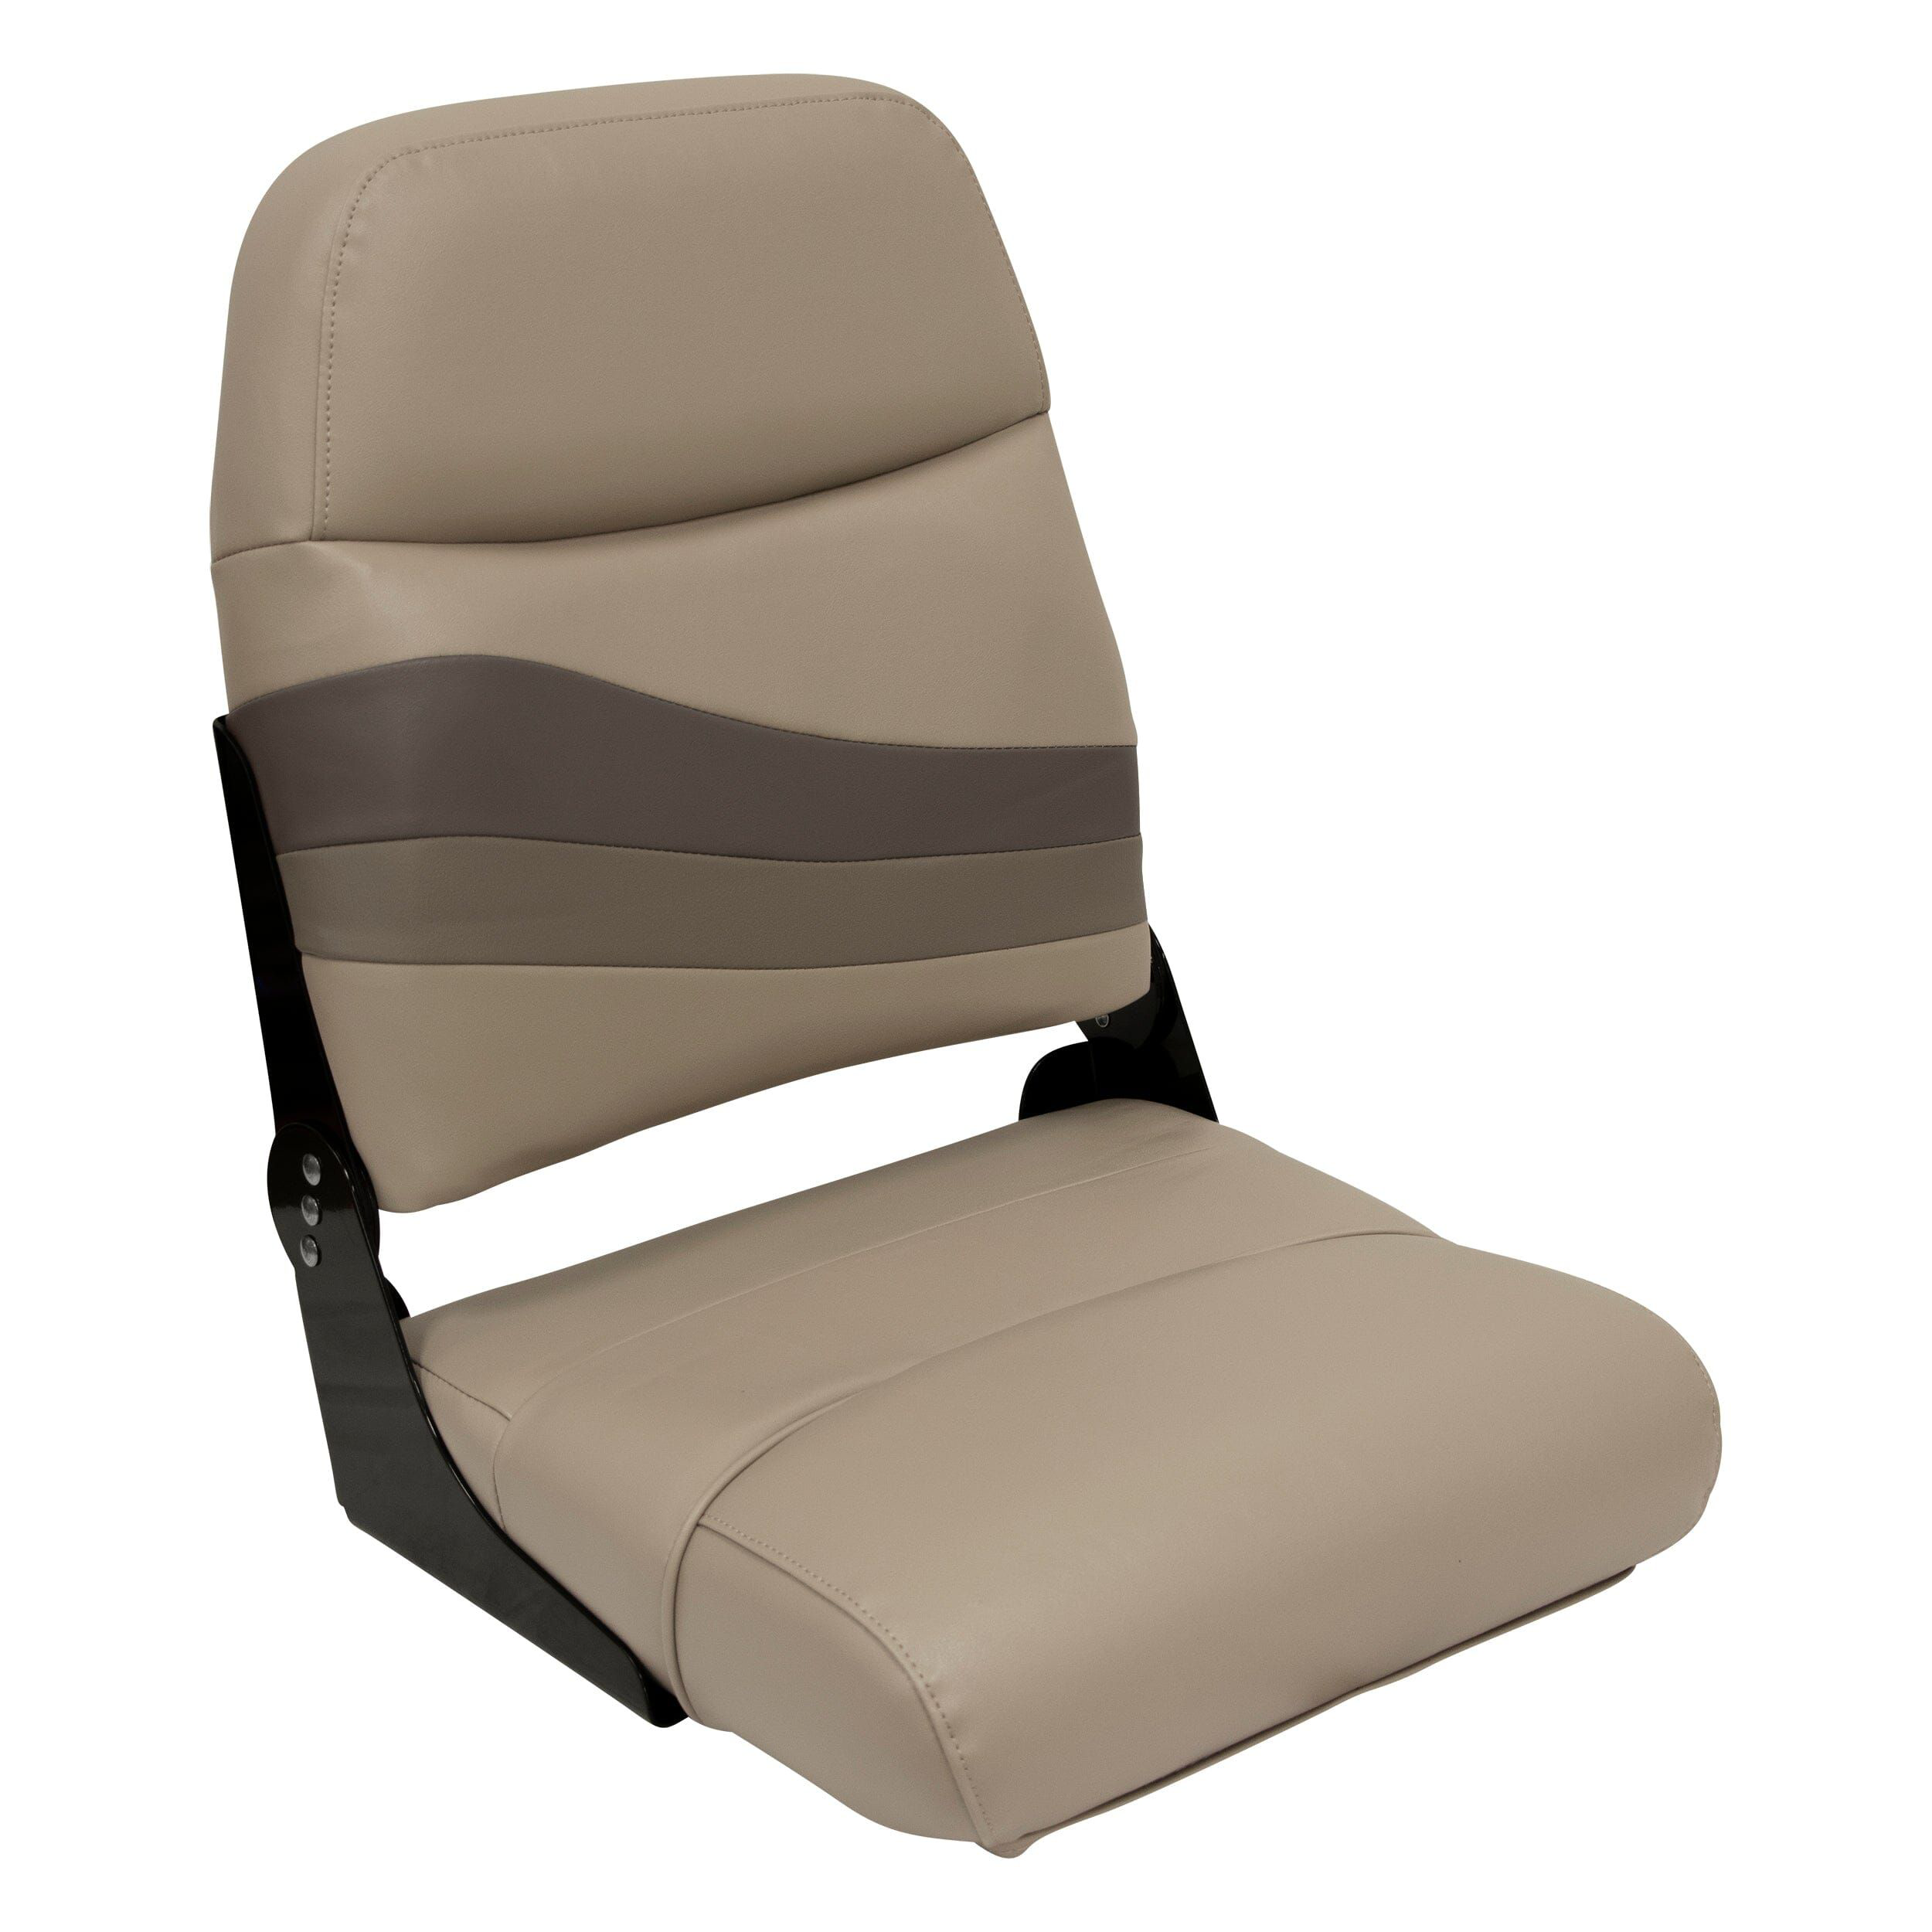 Wise Premier Series Pontoon Furniture High-Back Boat Seat - Mocha Java/Mushroom/Cafe